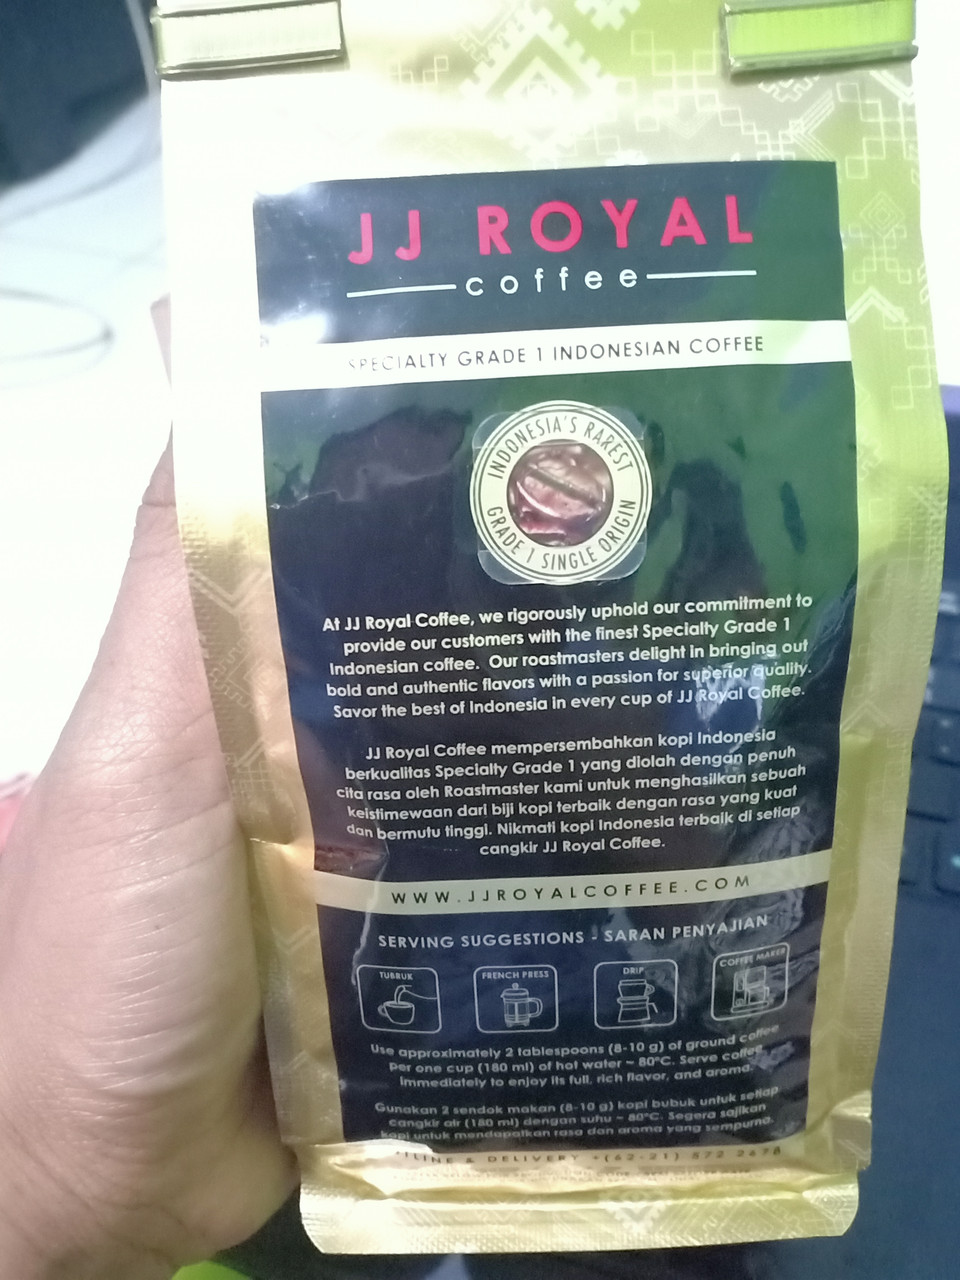 JJ Royal Lampung Robusta (Coffee Bean) - Indonesian Single Origin, 200 Gram